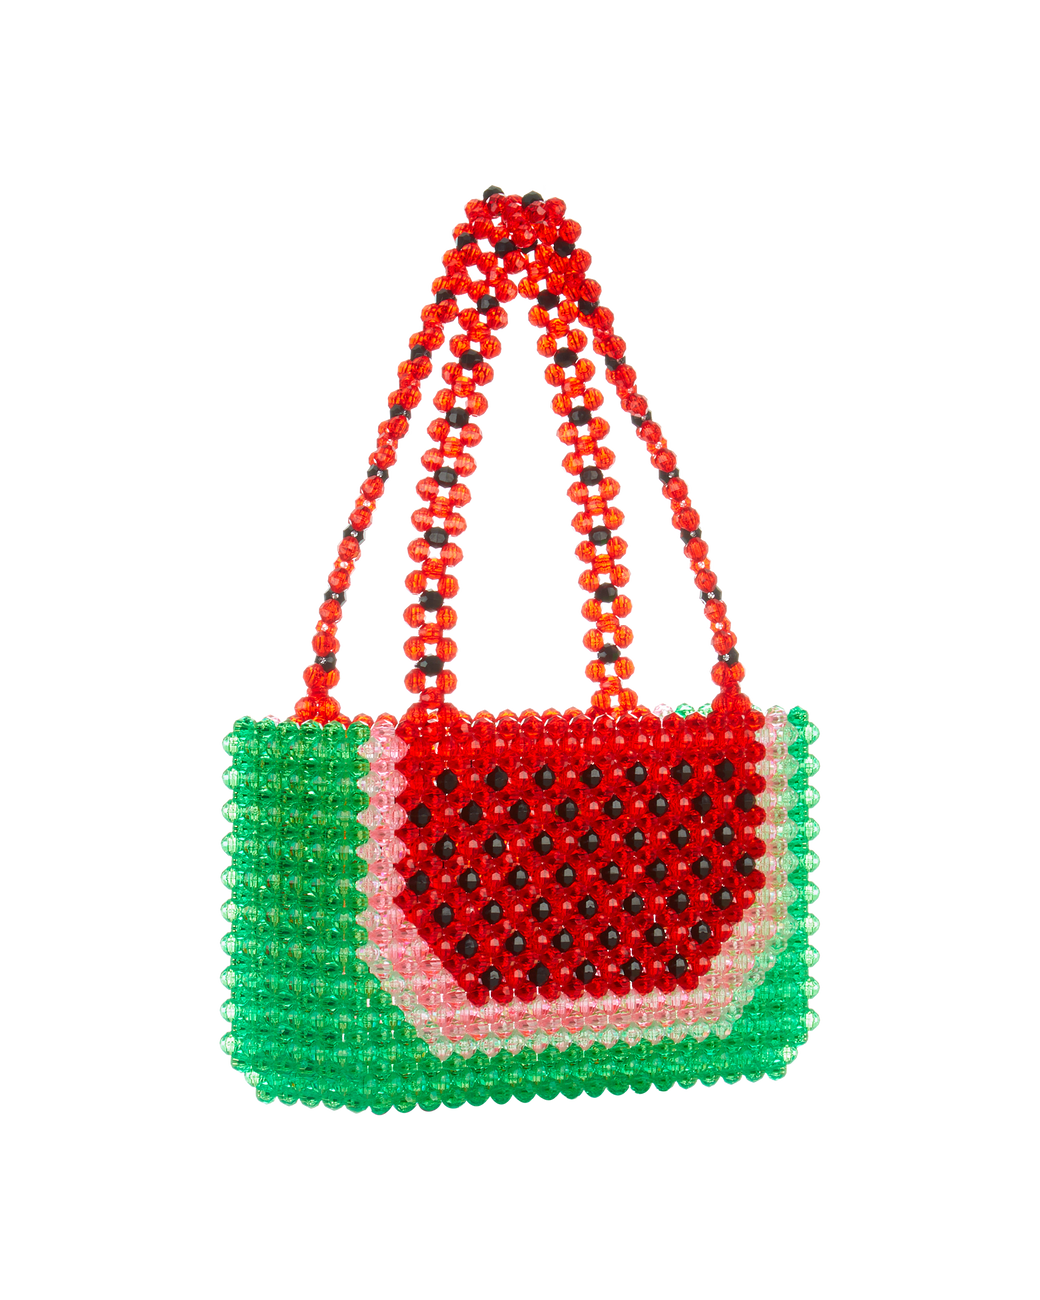 Watermelon Dream Bag – Susan Alexandra